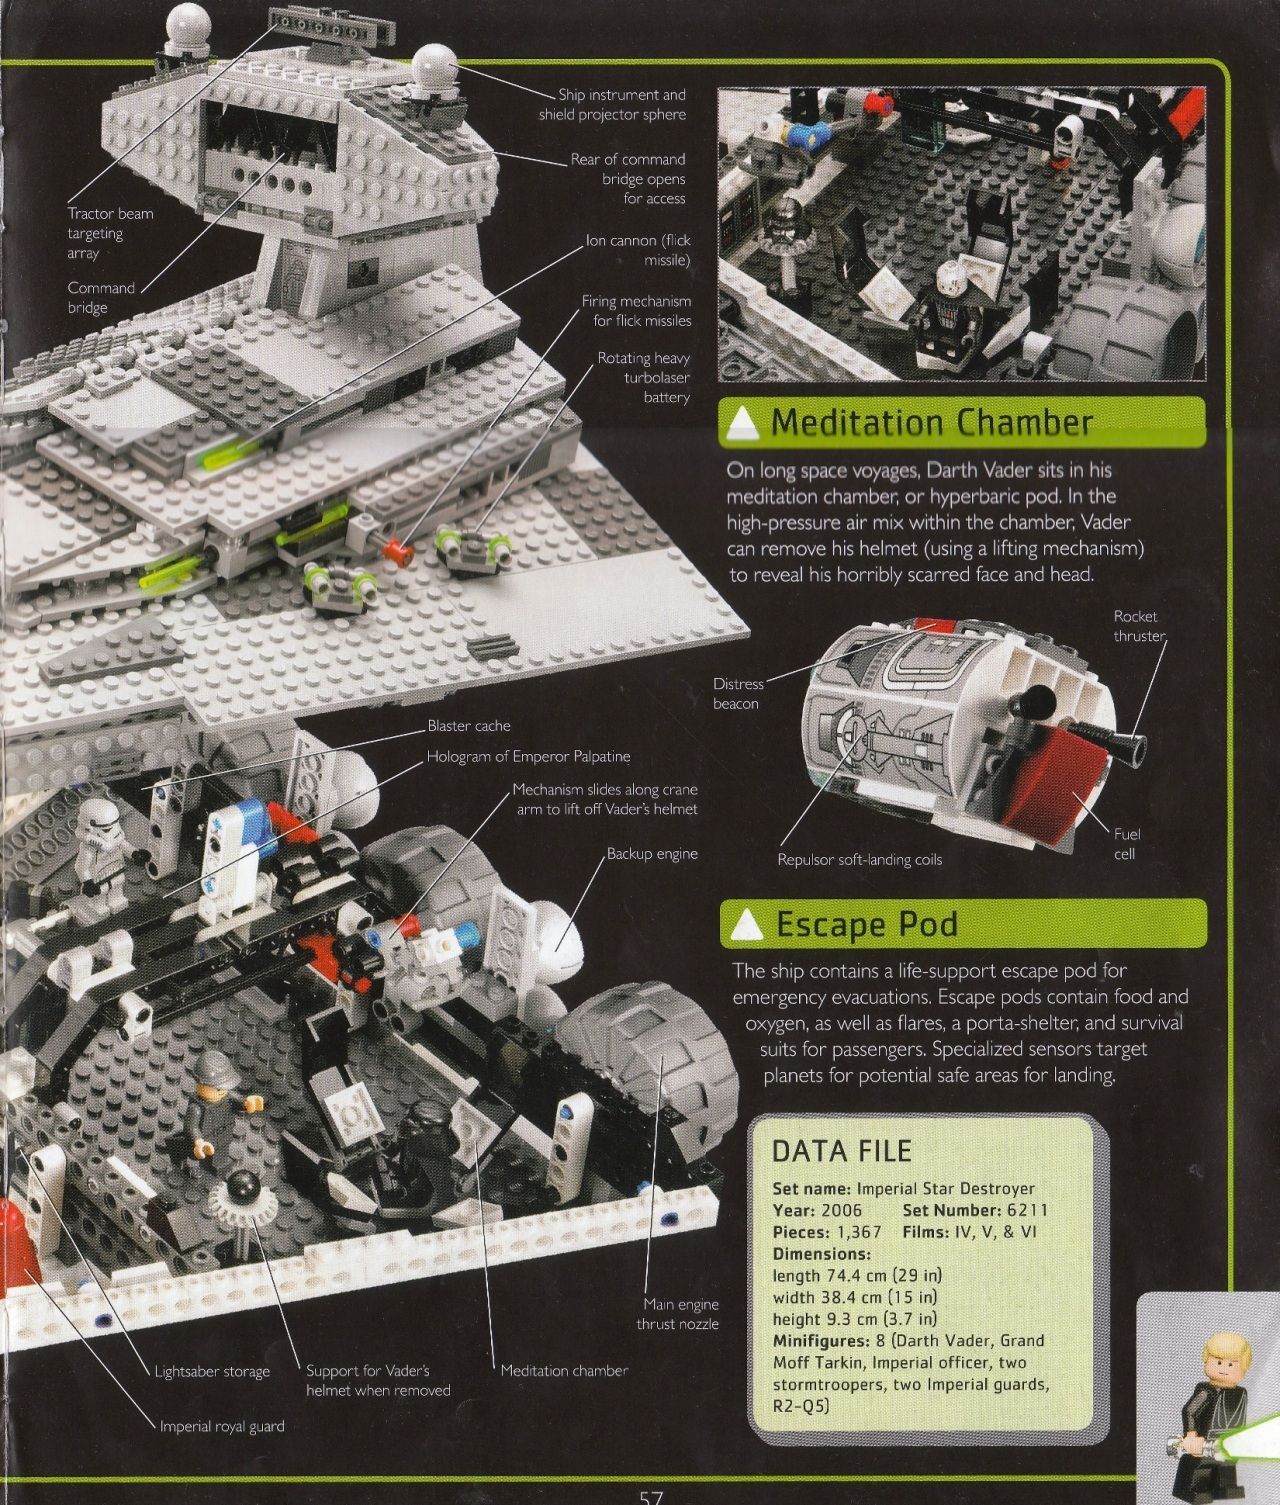 Lego Star Wars The Visual Dictionary 2009 Lego Star Wars The Visual Dictionary 2009 58